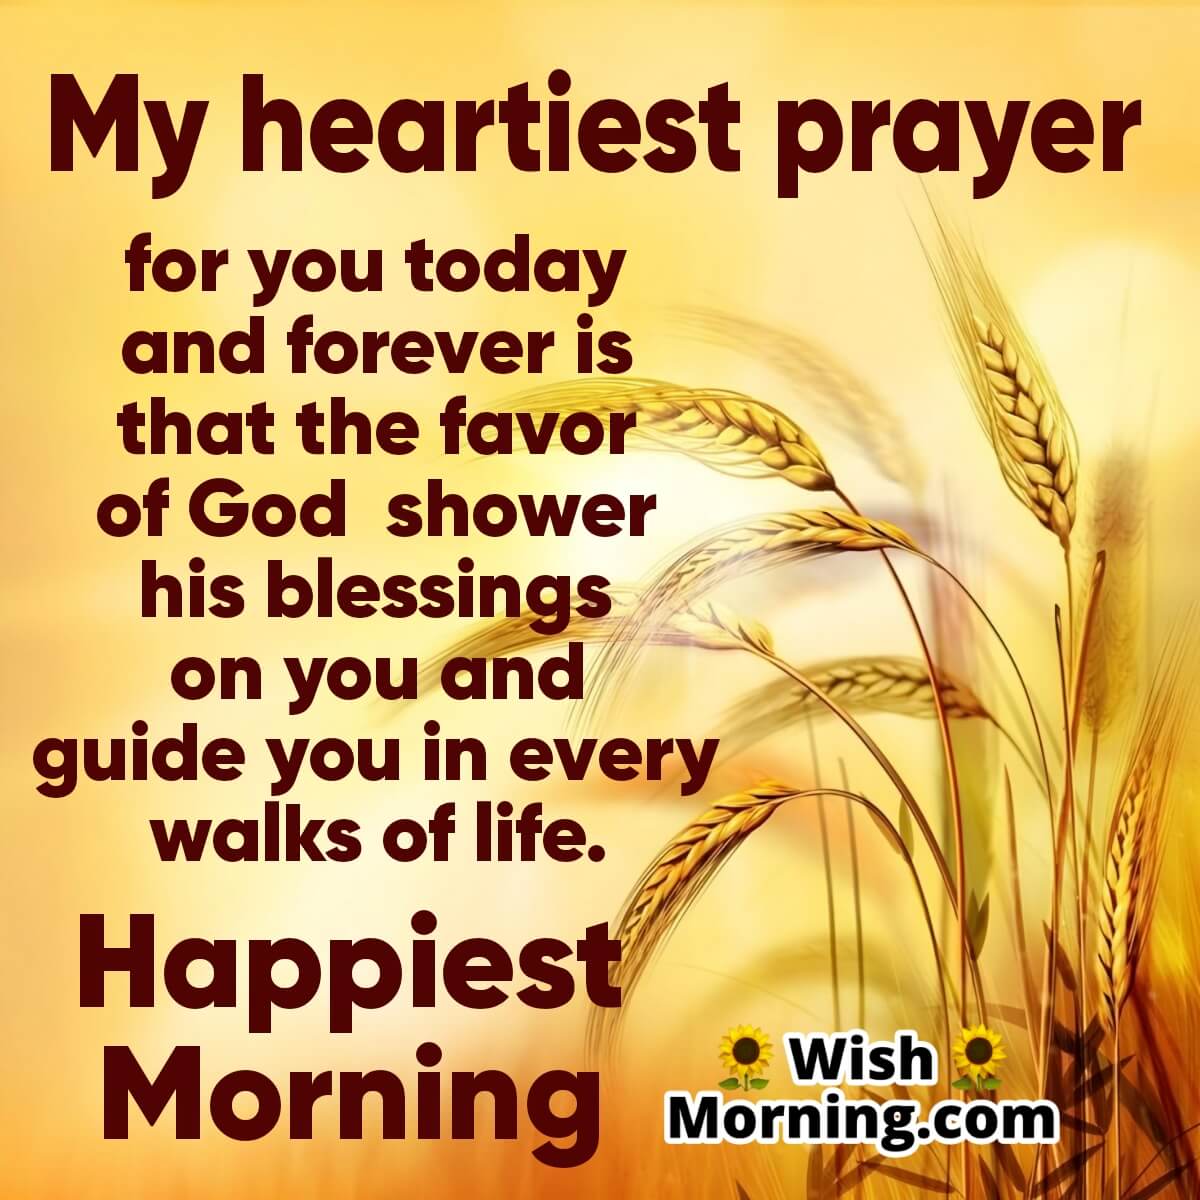 Happiest Morning Prayer Message